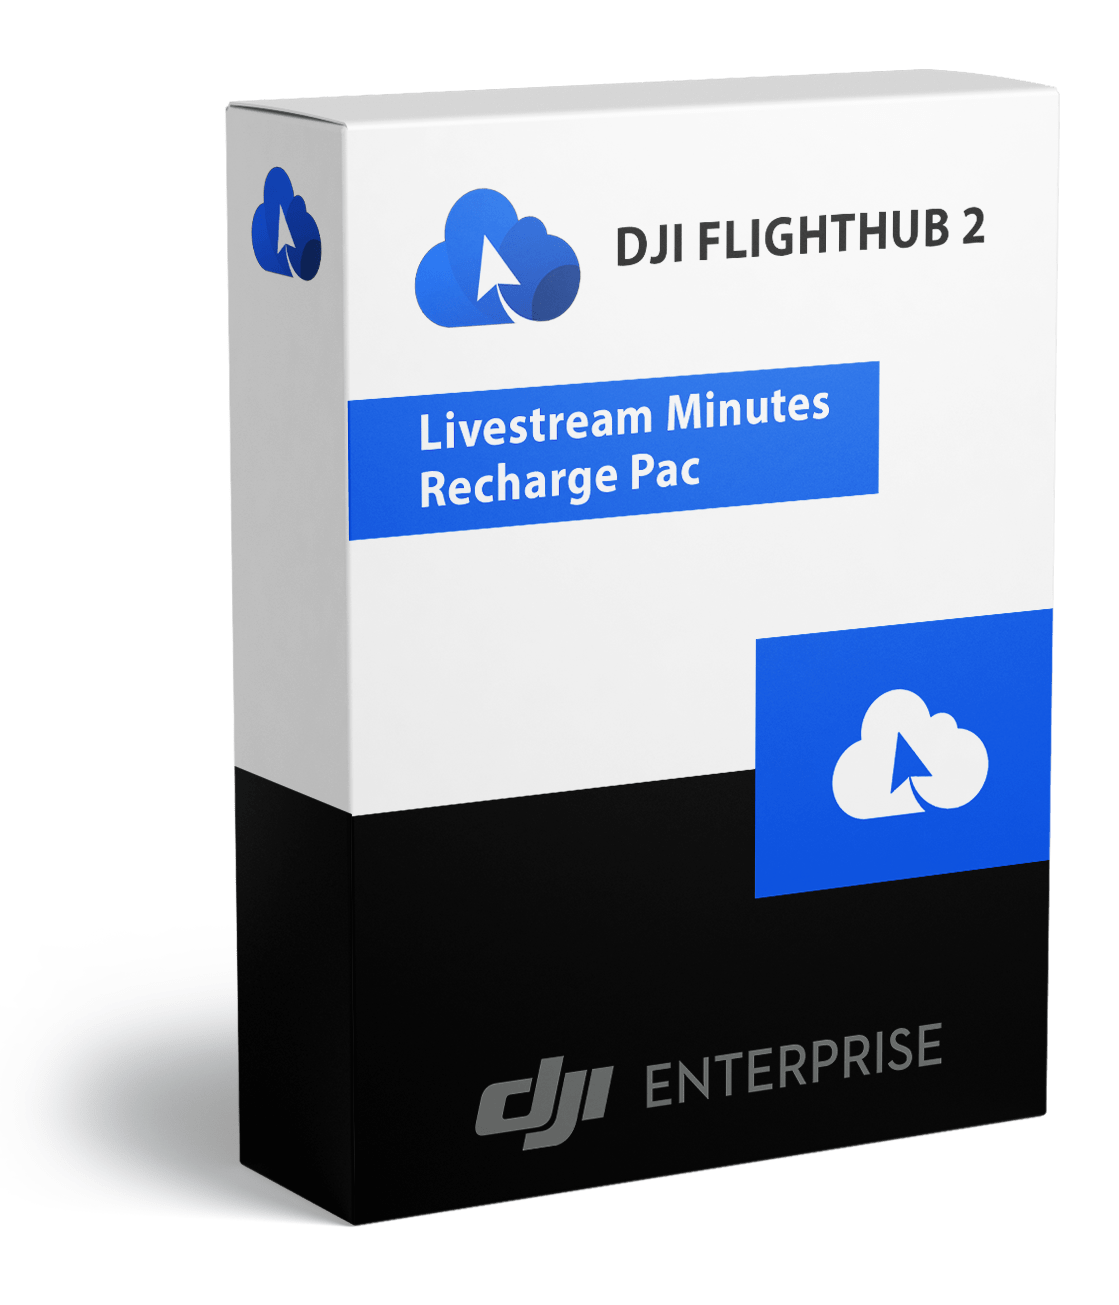 DJI Flight Hub 2 – Livestream Minutes Recharge Package